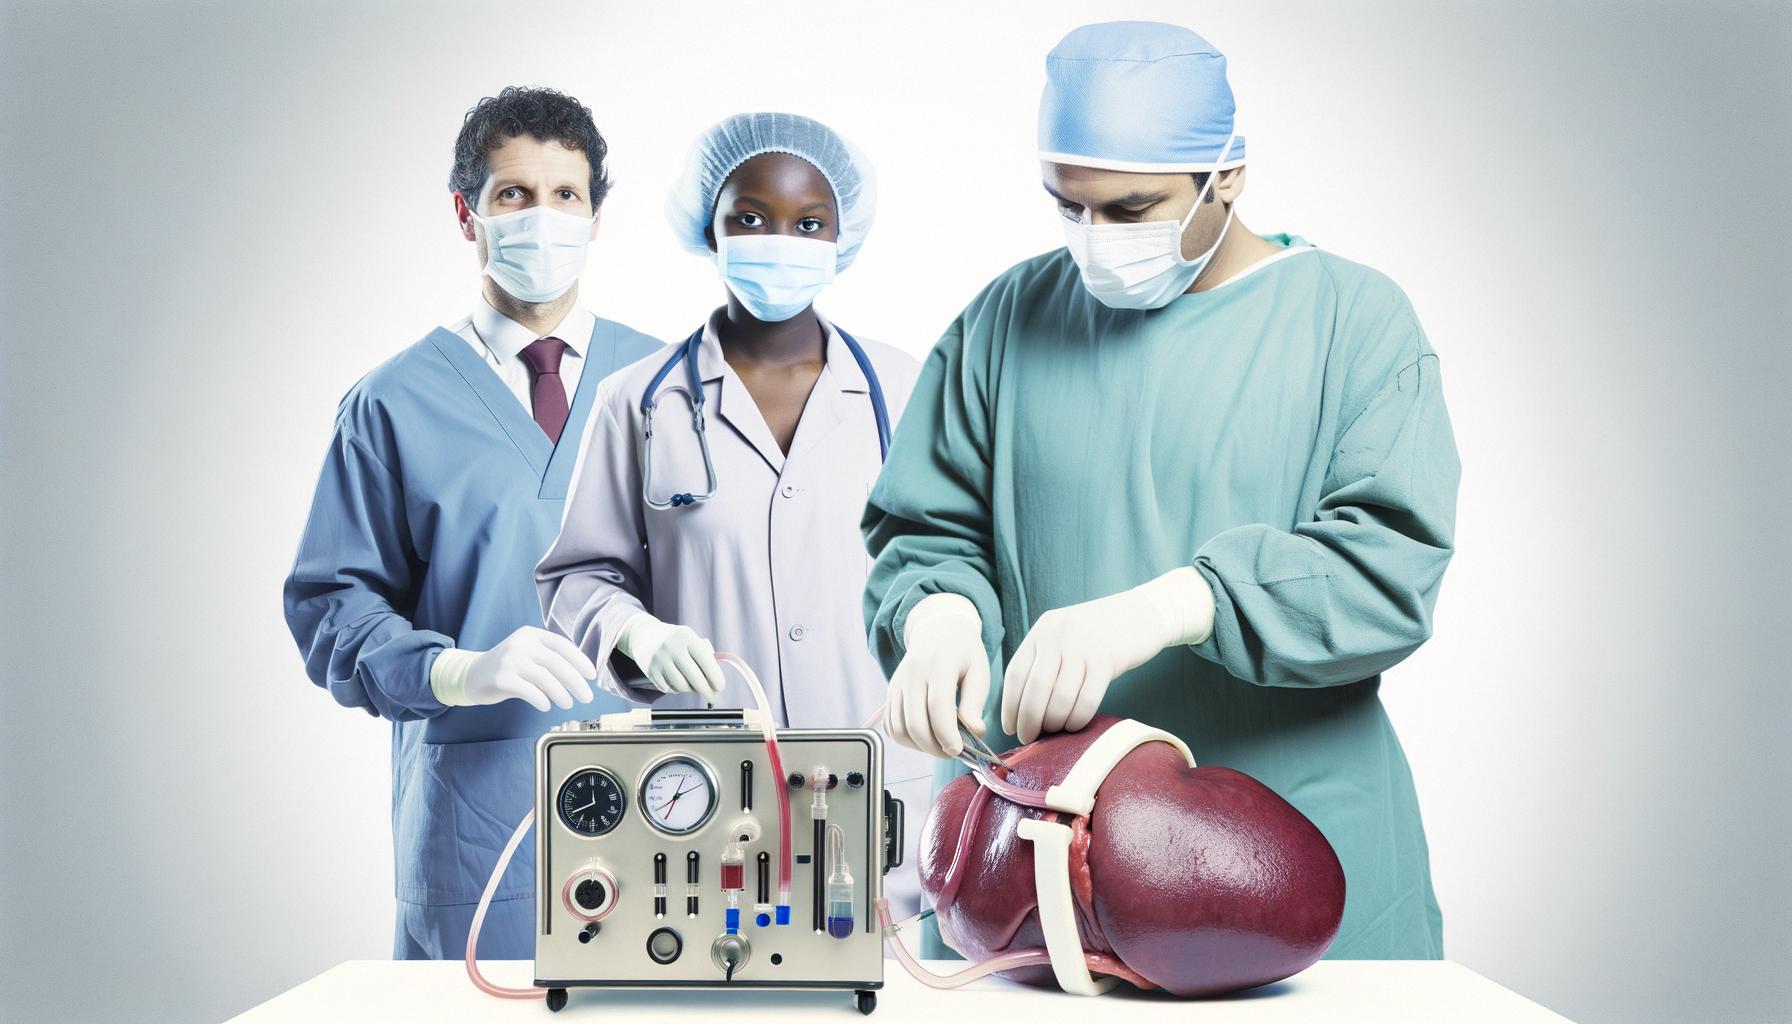 Organ transplantation innovations can potentially transform preservation and success rates.